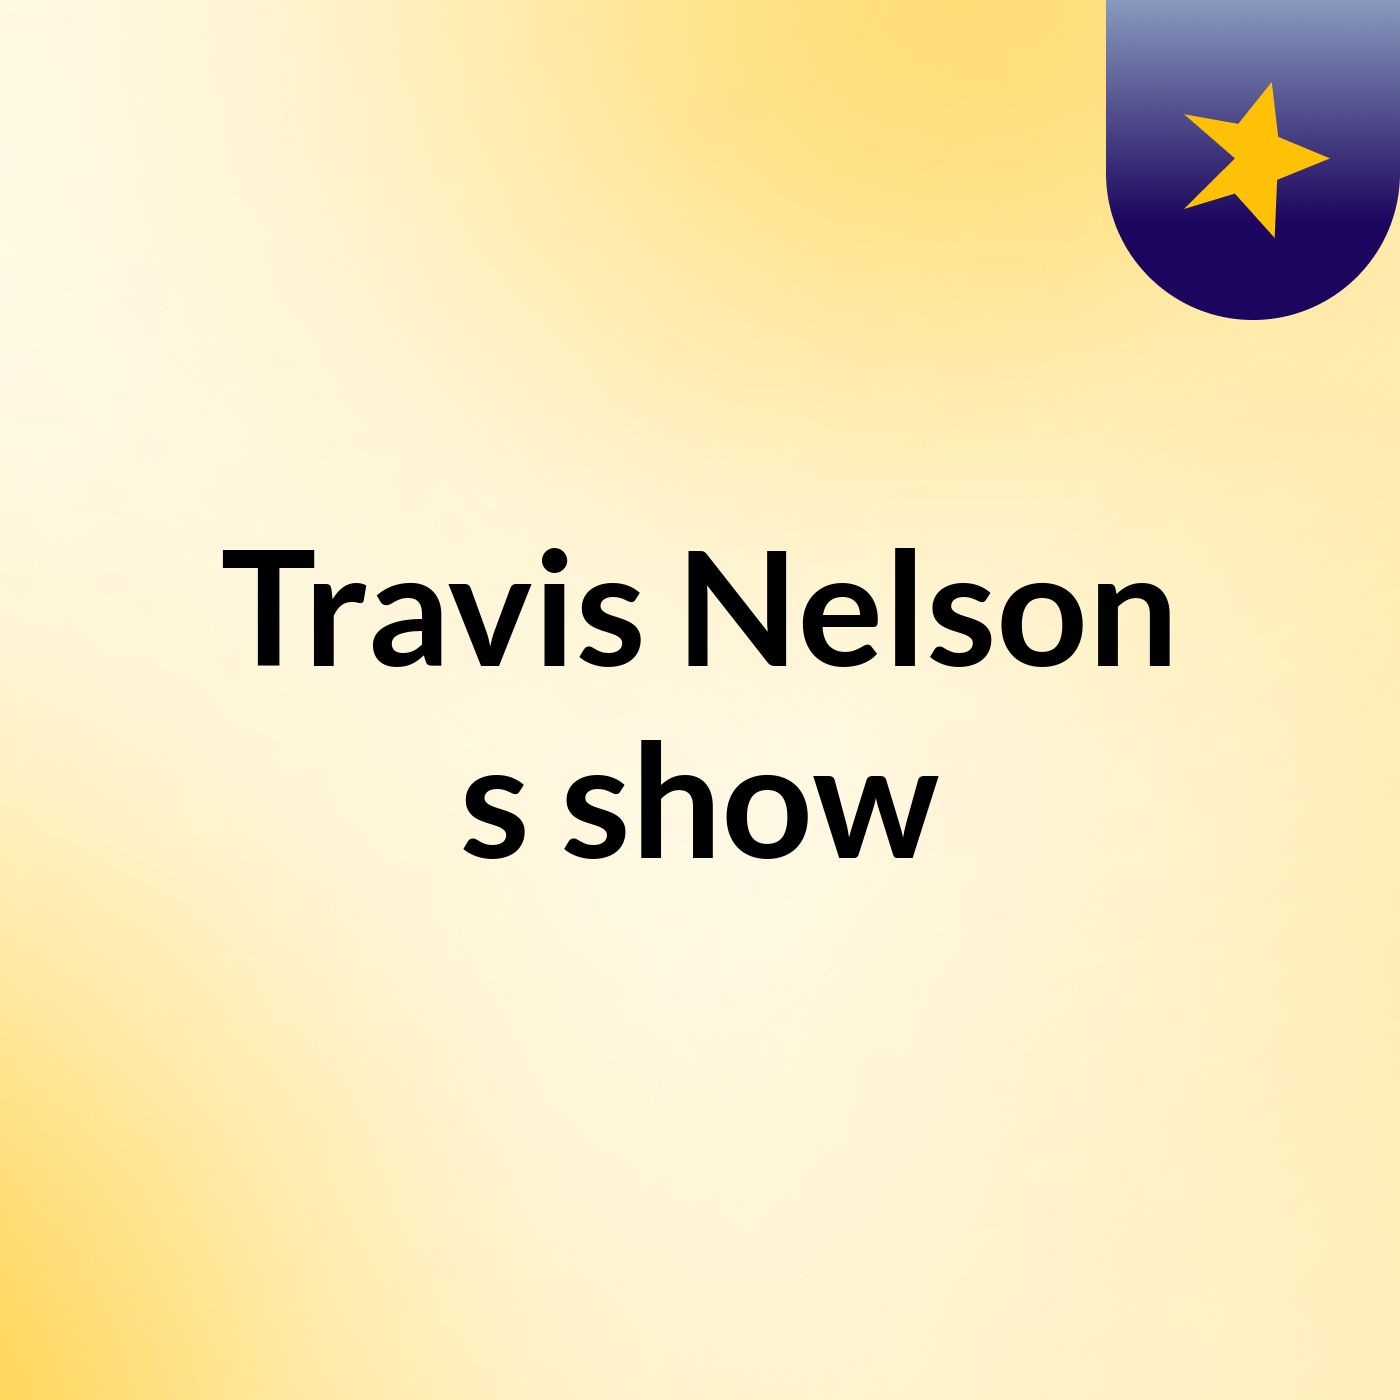 Travis Nelson's show